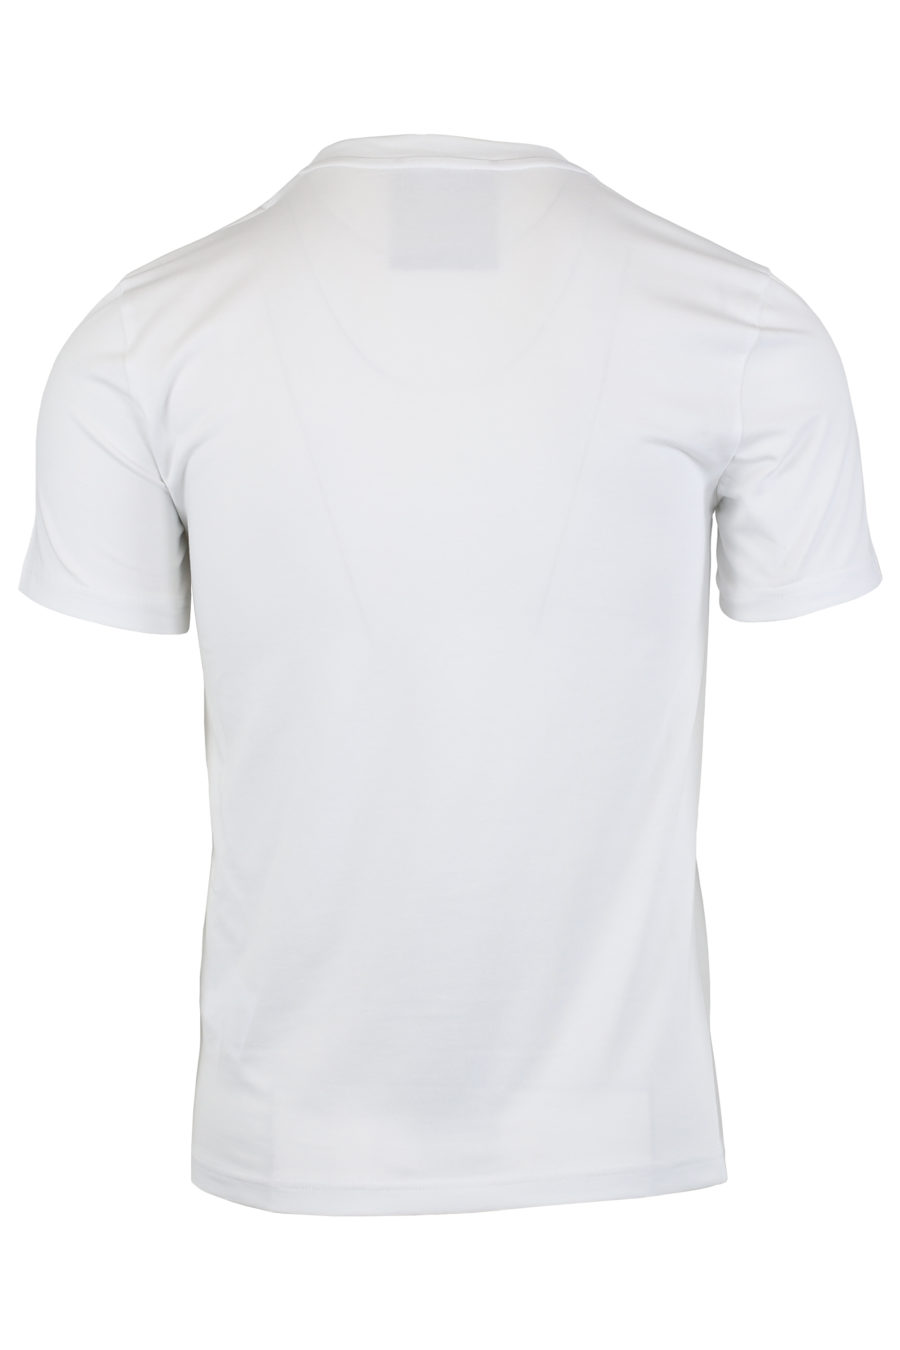 Weißes Teddybär-Sommer-T-Shirt - IMG 0870